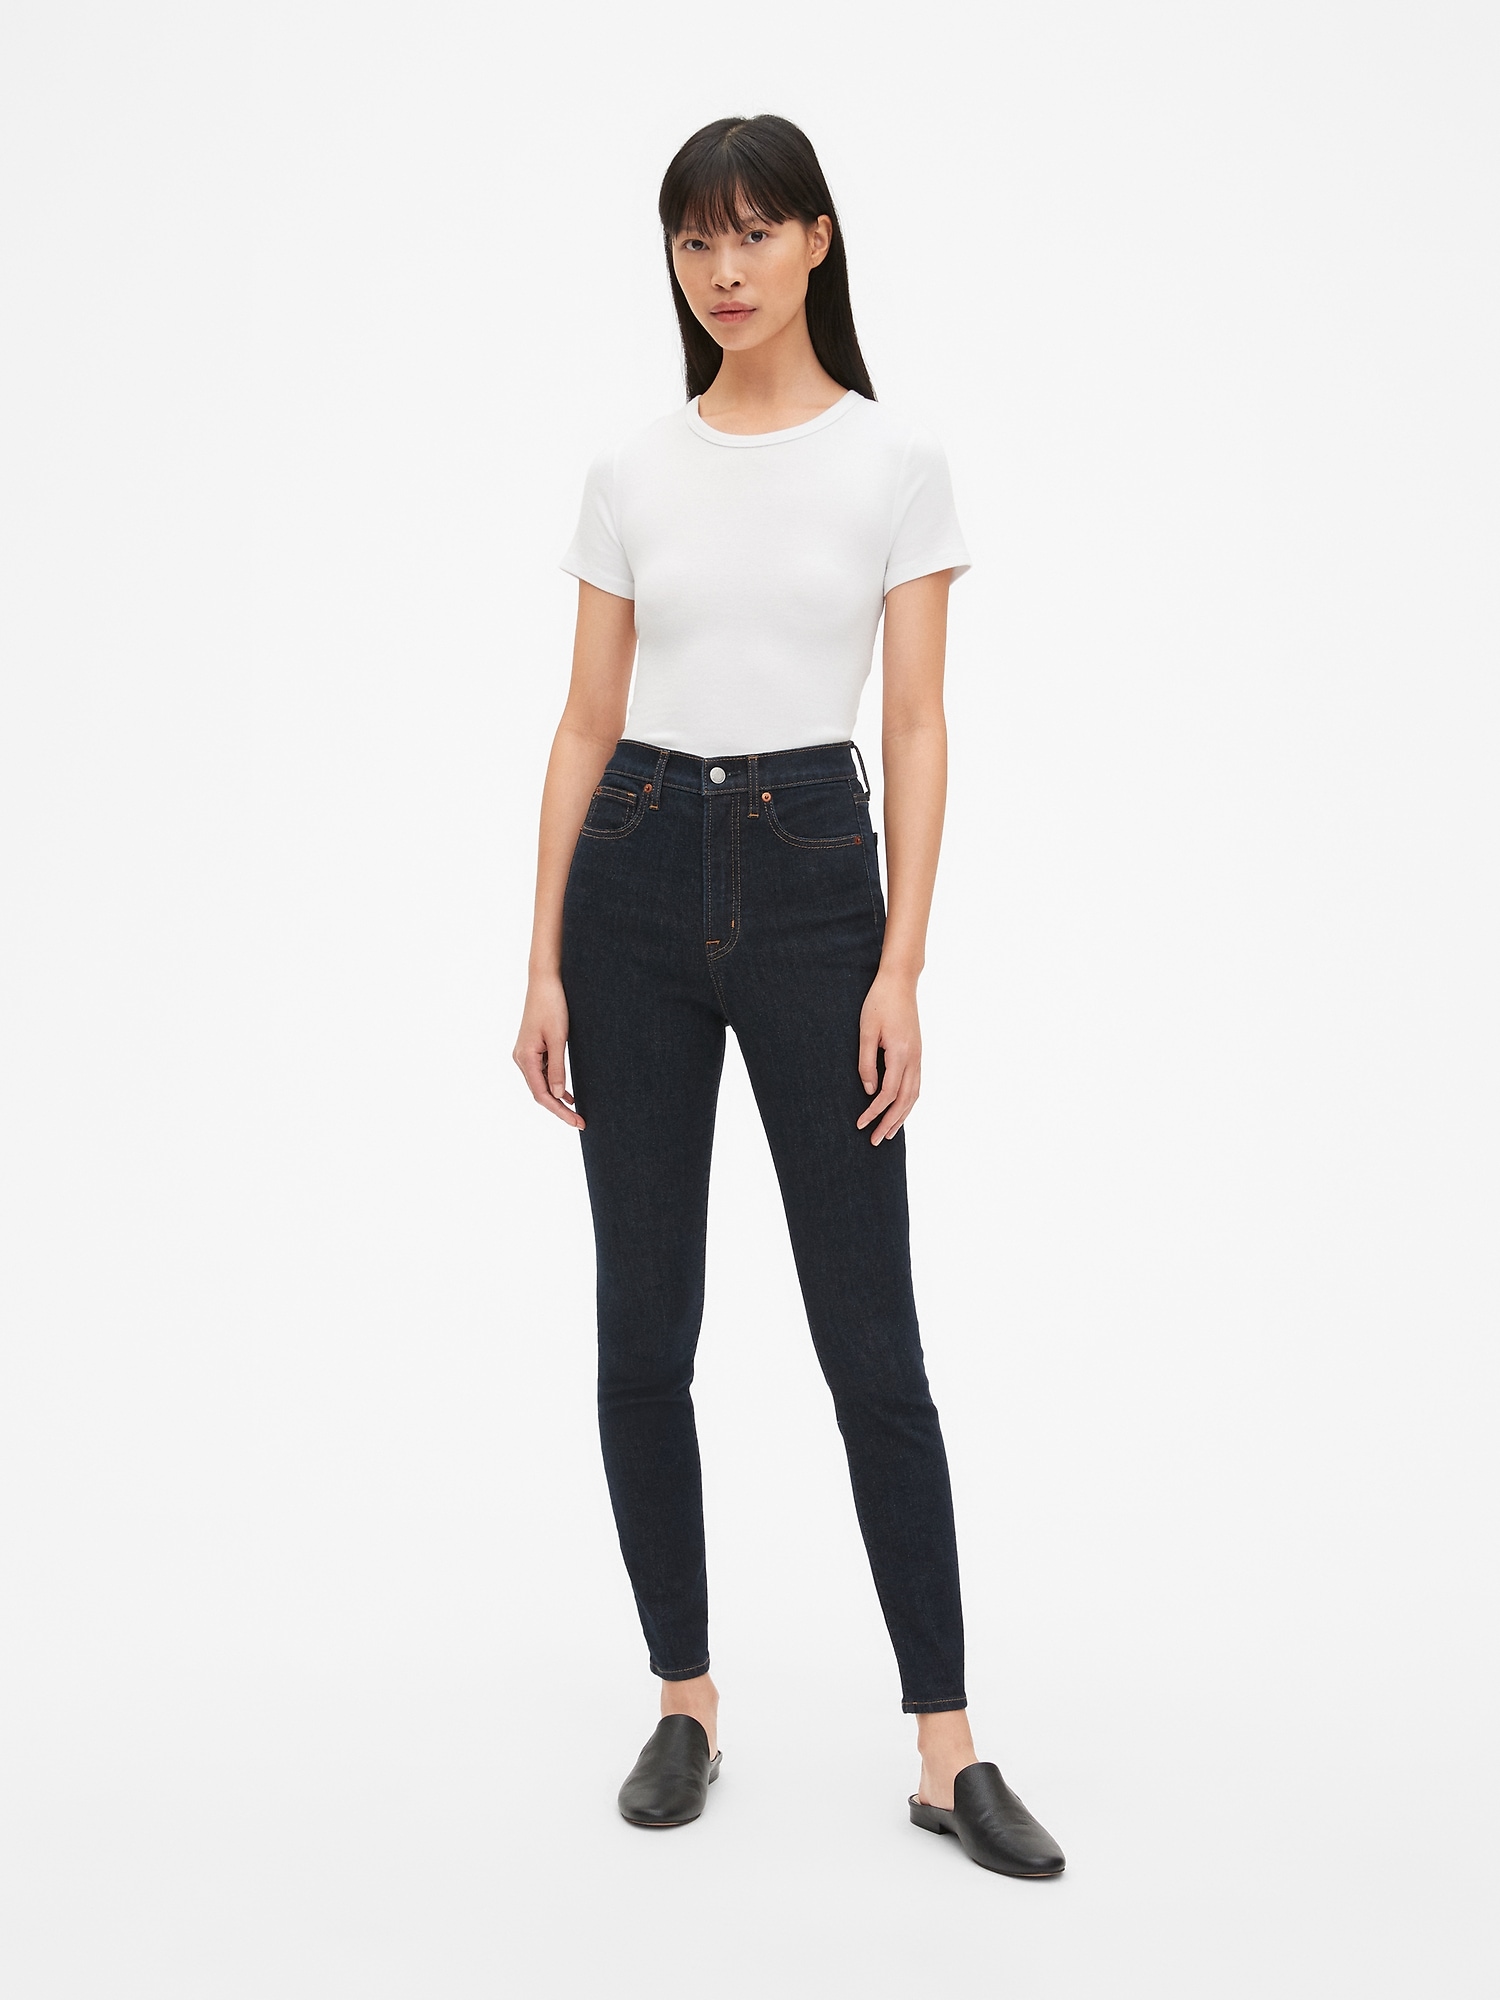 gap true skinny black jeans